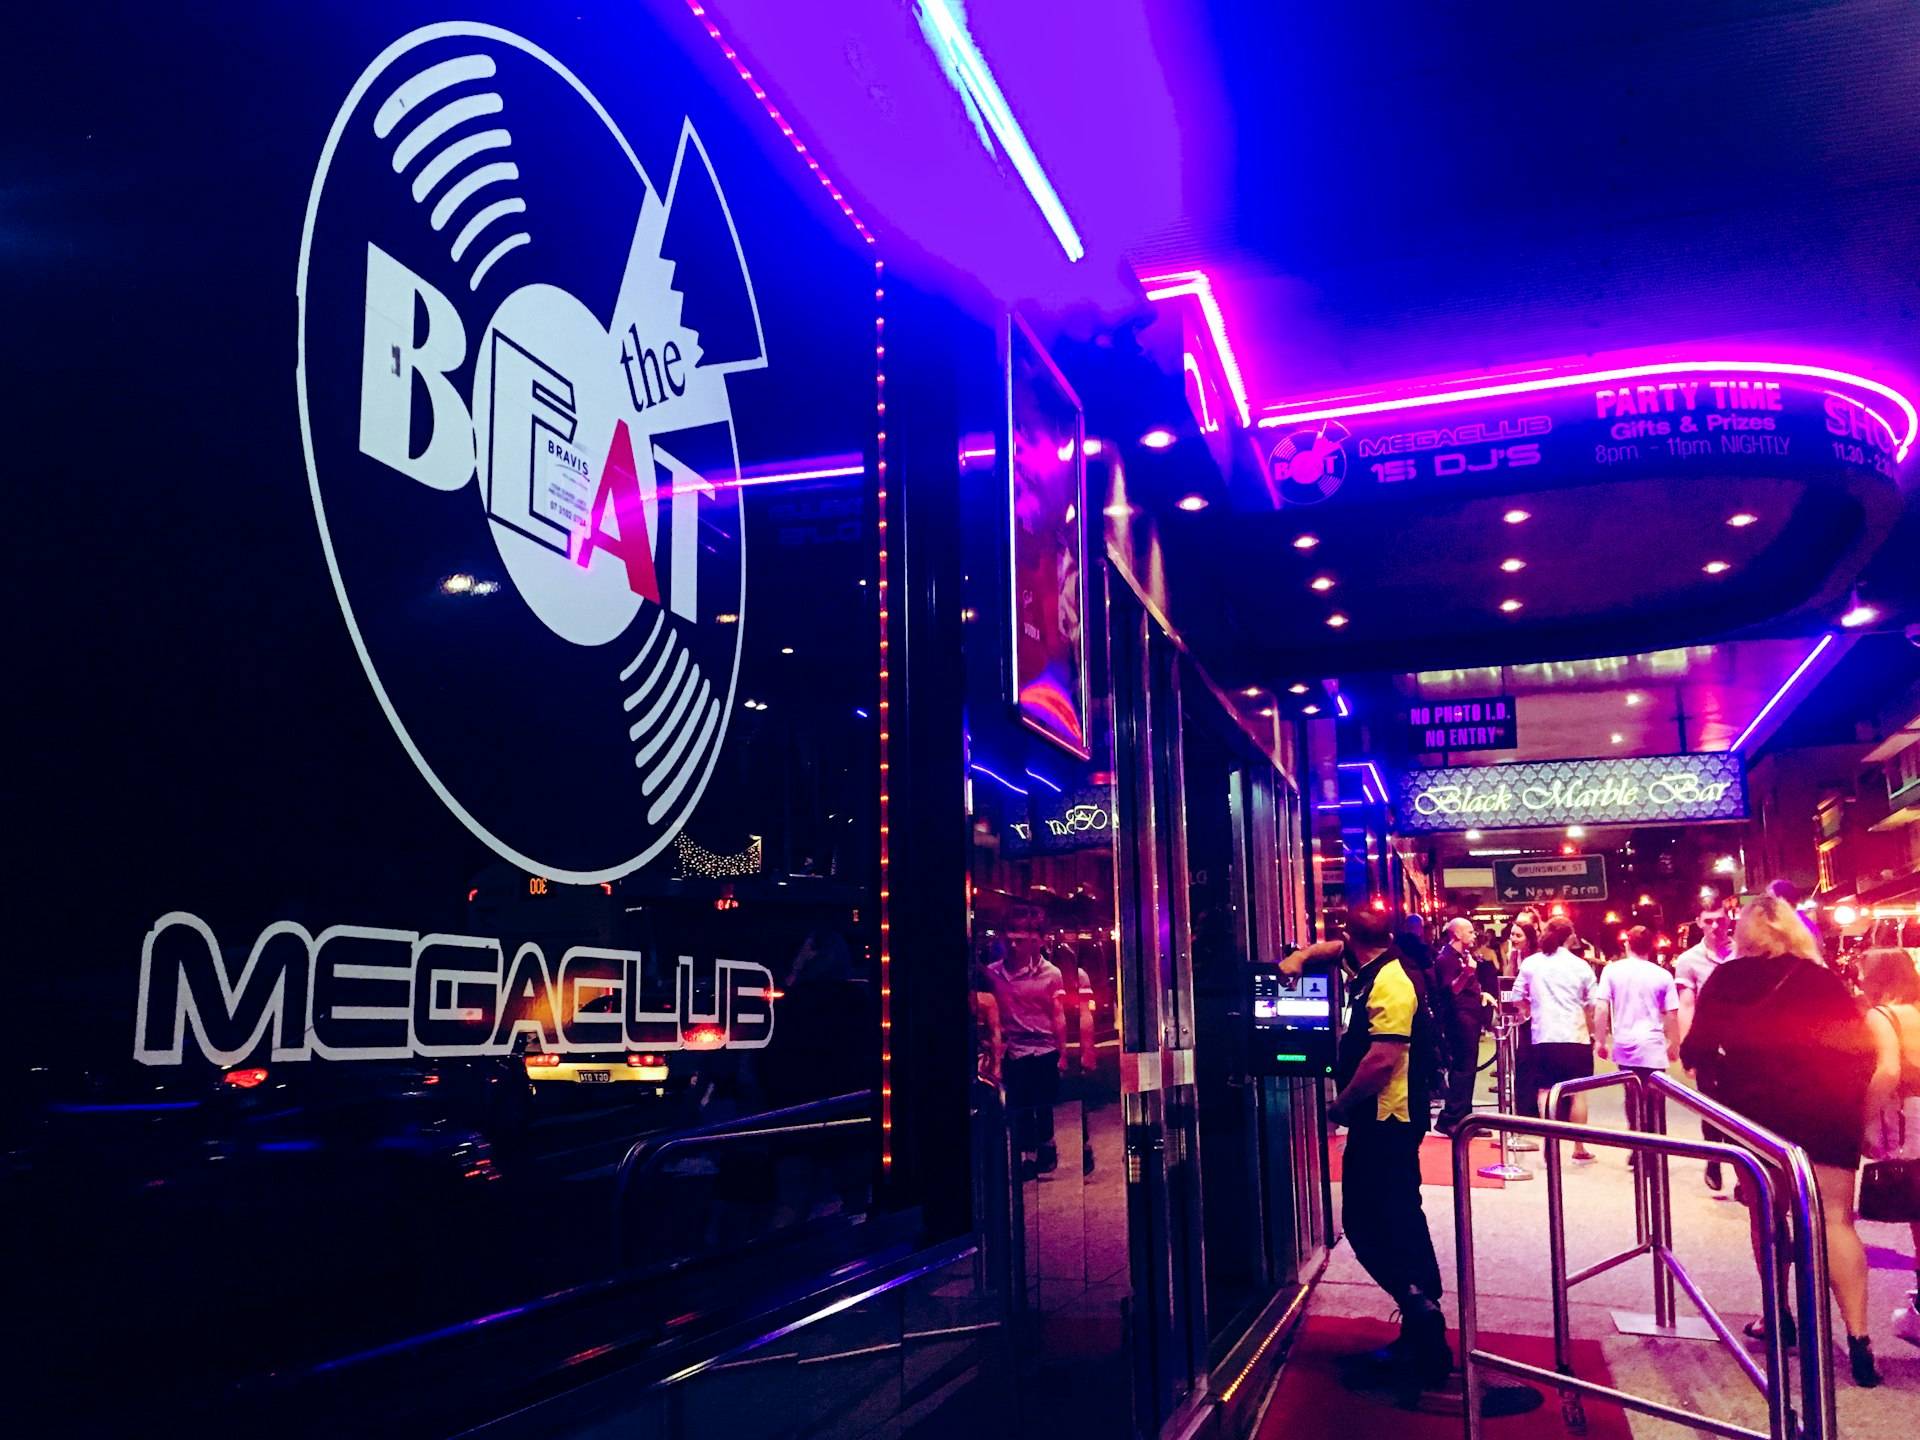 Exterior of Beat Megaclub at night